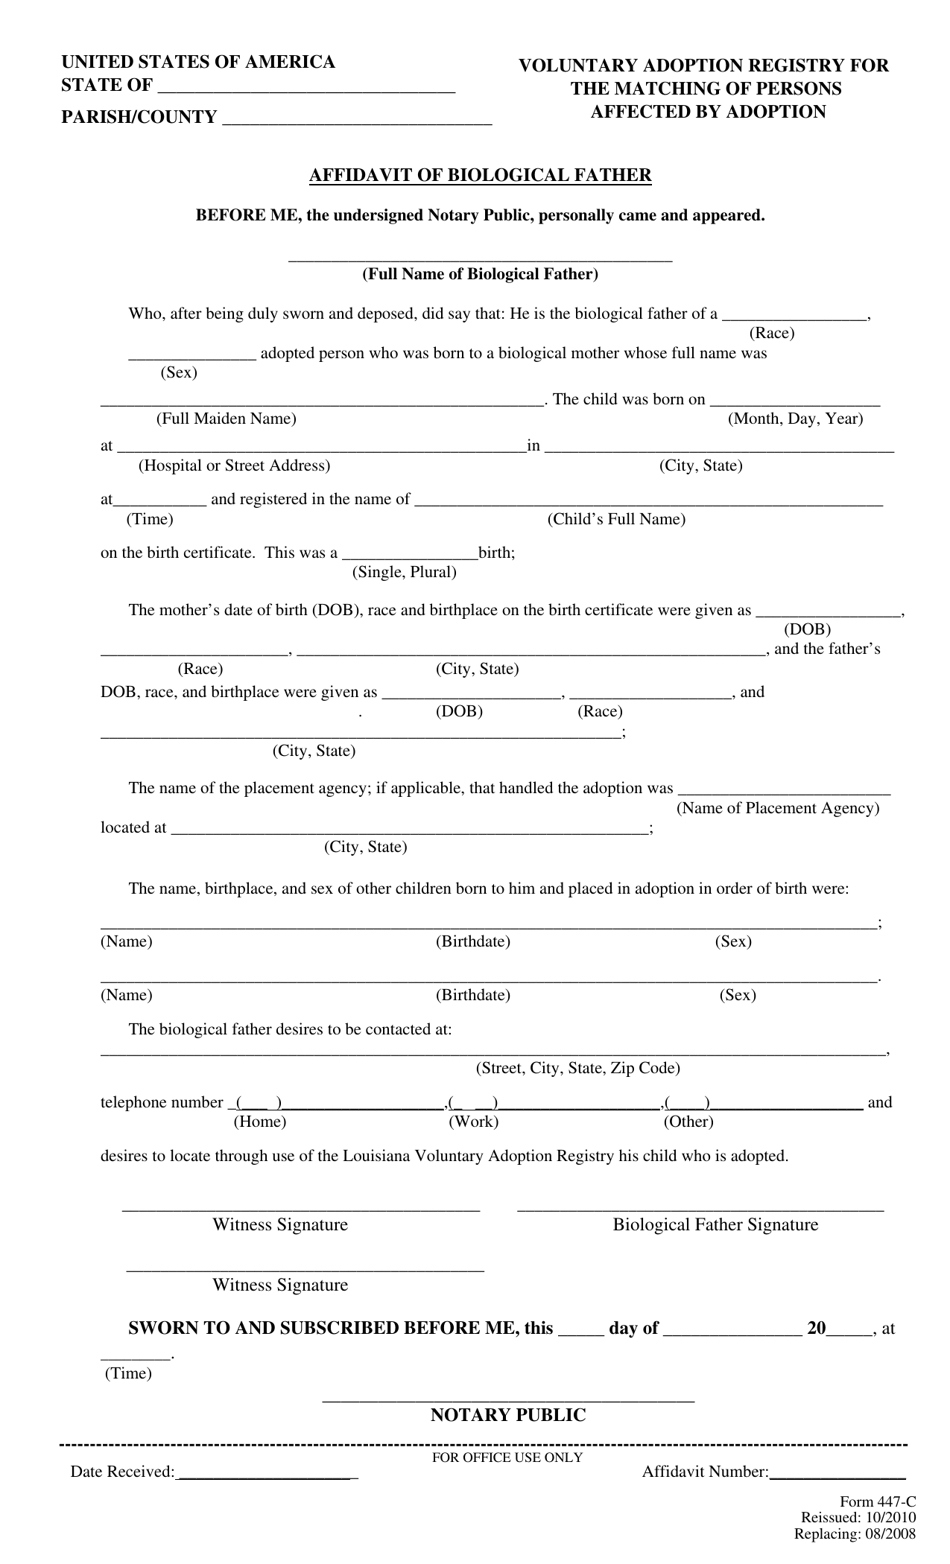 Form 447-C Affidavit of Biological Father - Louisiana, Page 1